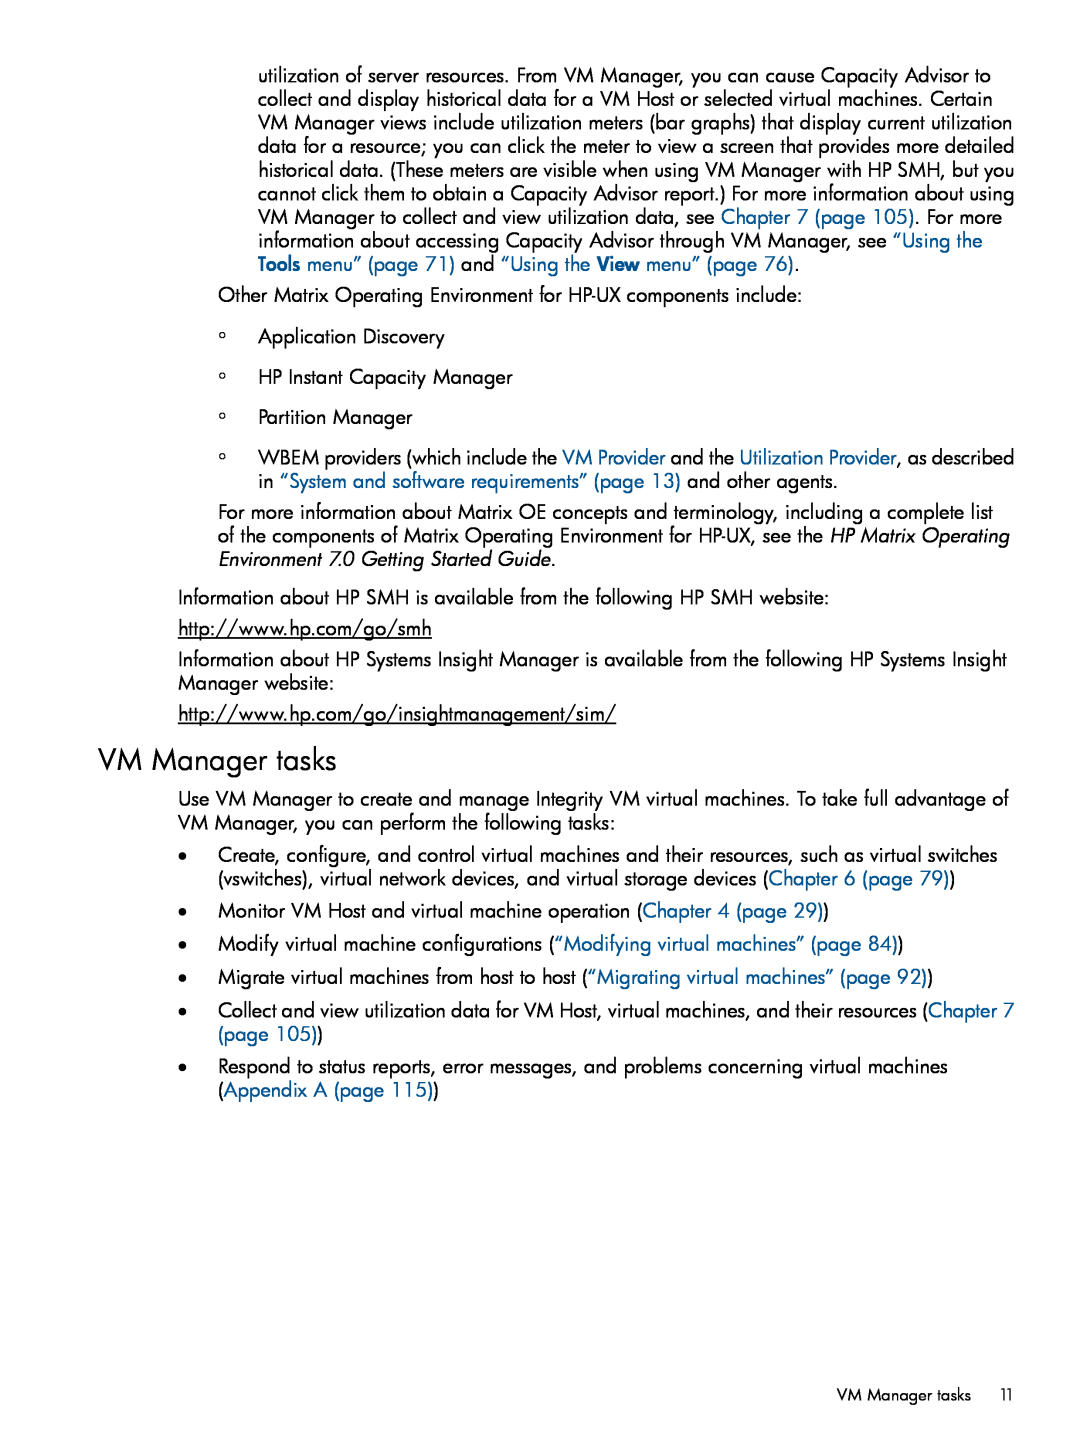 HP UX vPars and Integrity VM v6 manual VM Manager tasks 